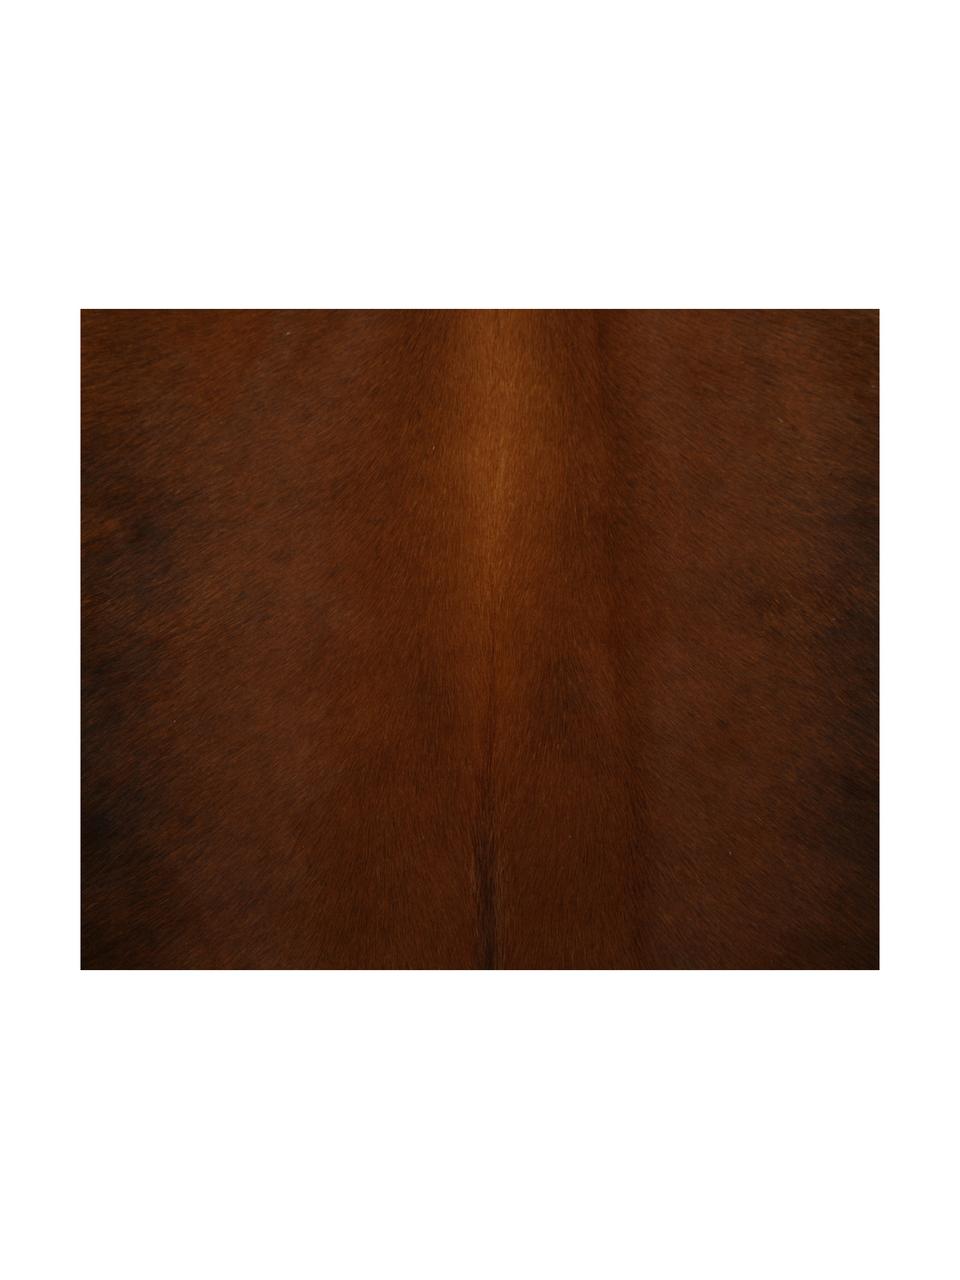 Koeienhuid vloerkleed Aquarius, Koeienhuid, Zwartbruin, Unieke koeienhuid 940, 160 x 180 cm